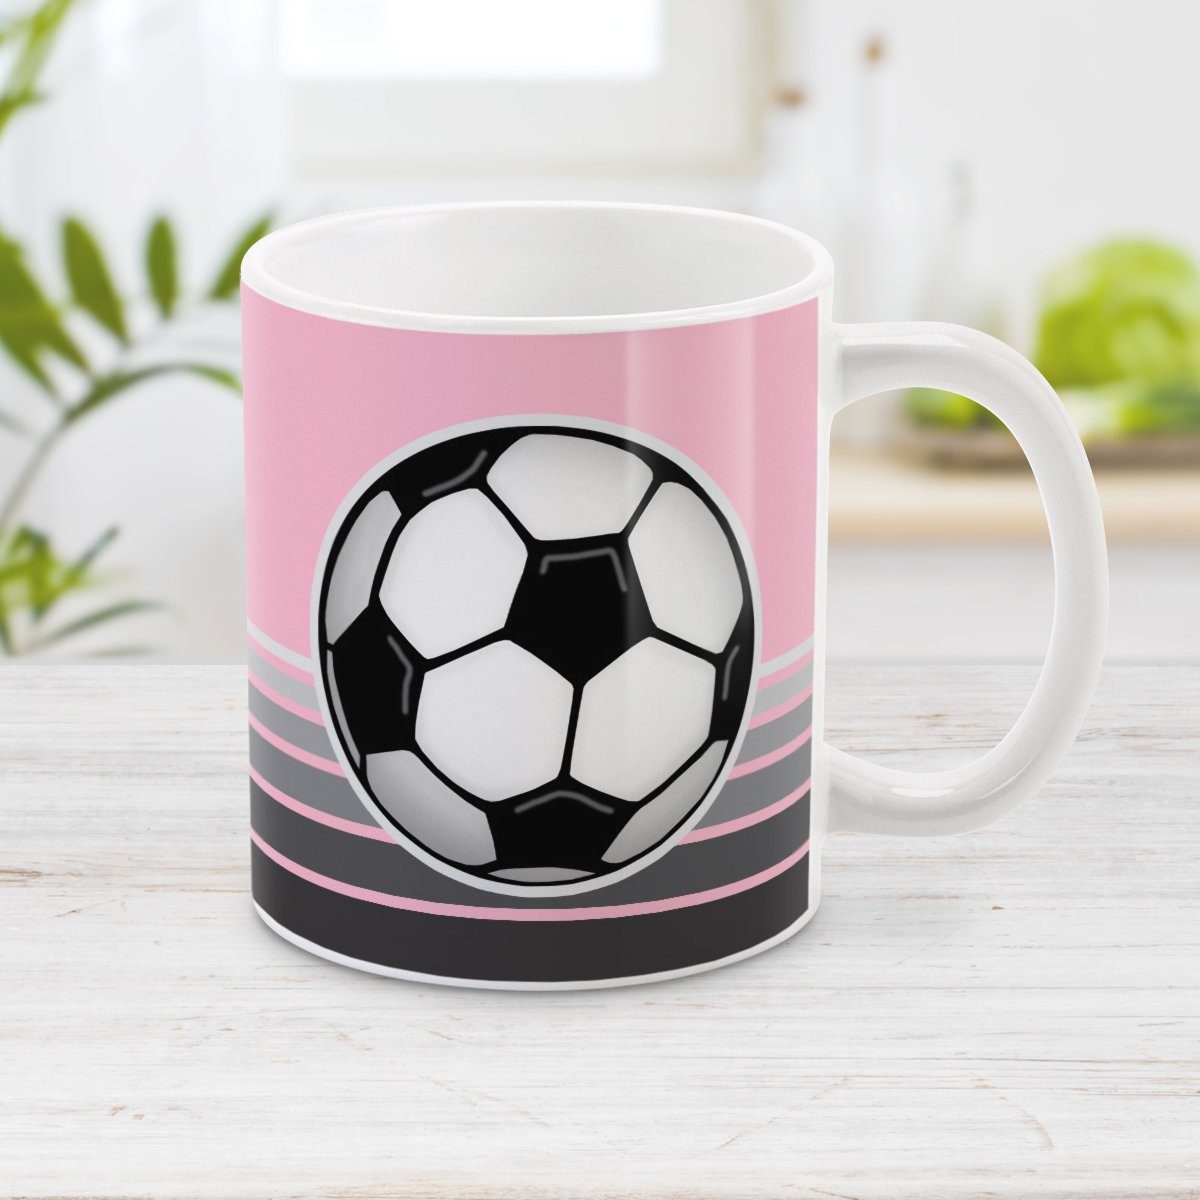 Gray Gradient Lined Pink Soccer Ball Mug at Amy's Coffee Mugs